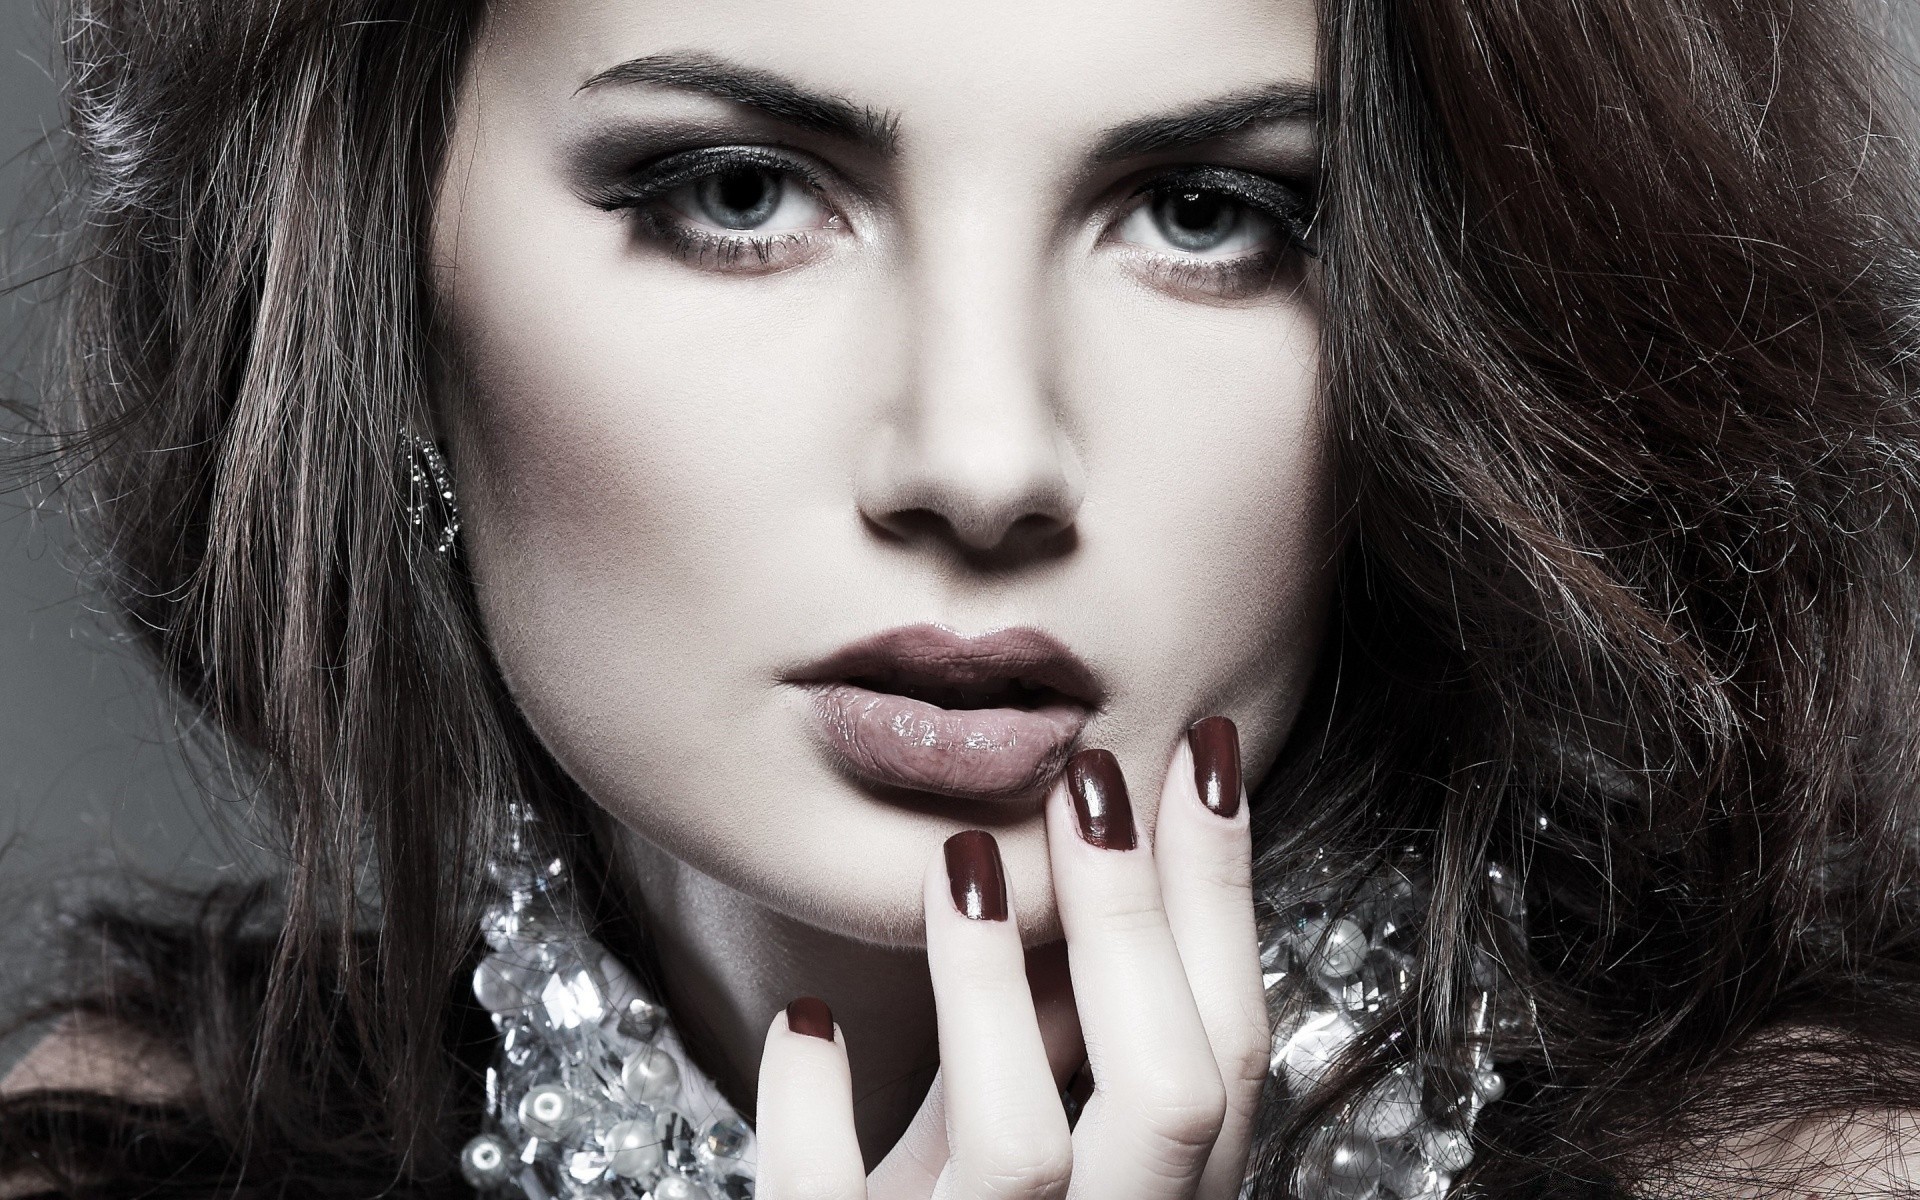 the other girls fashion glamour woman lips sexy eye portrait model girl hair lipstick skin elegant pretty luxury style